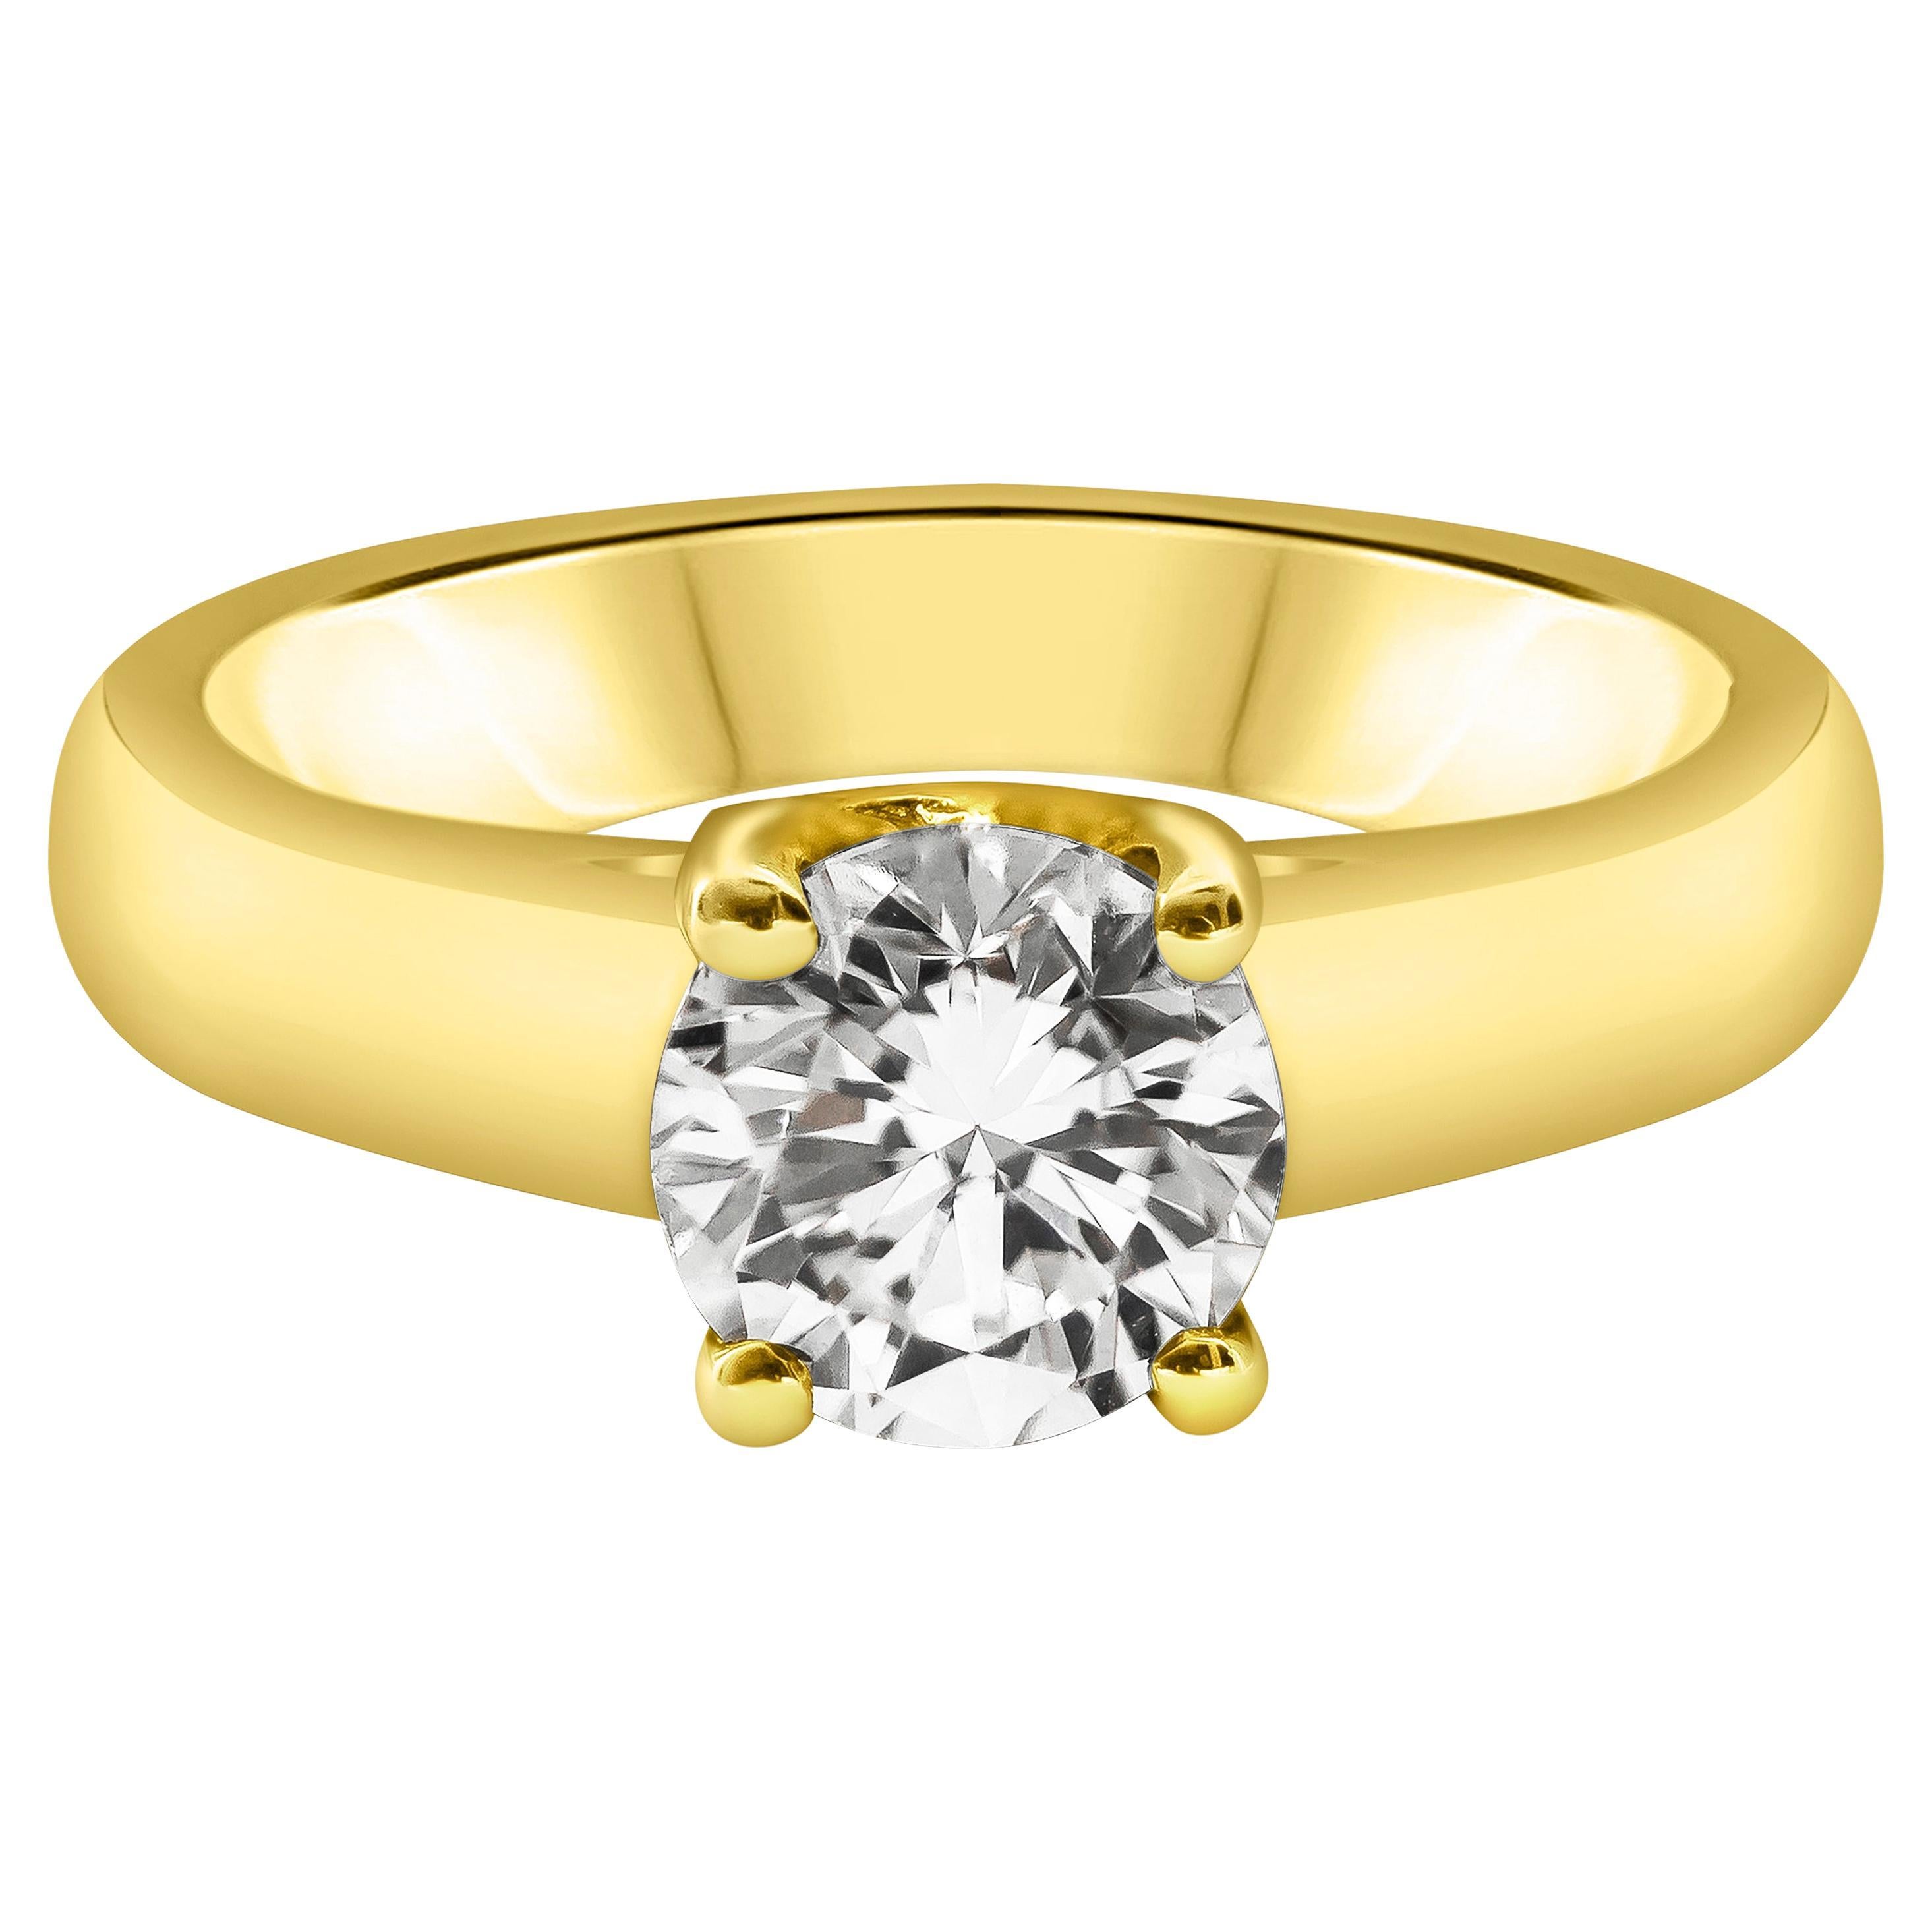 Roman Malakov 1.02 Carats Brilliant Round Diamond Solitaire Engagement Ring